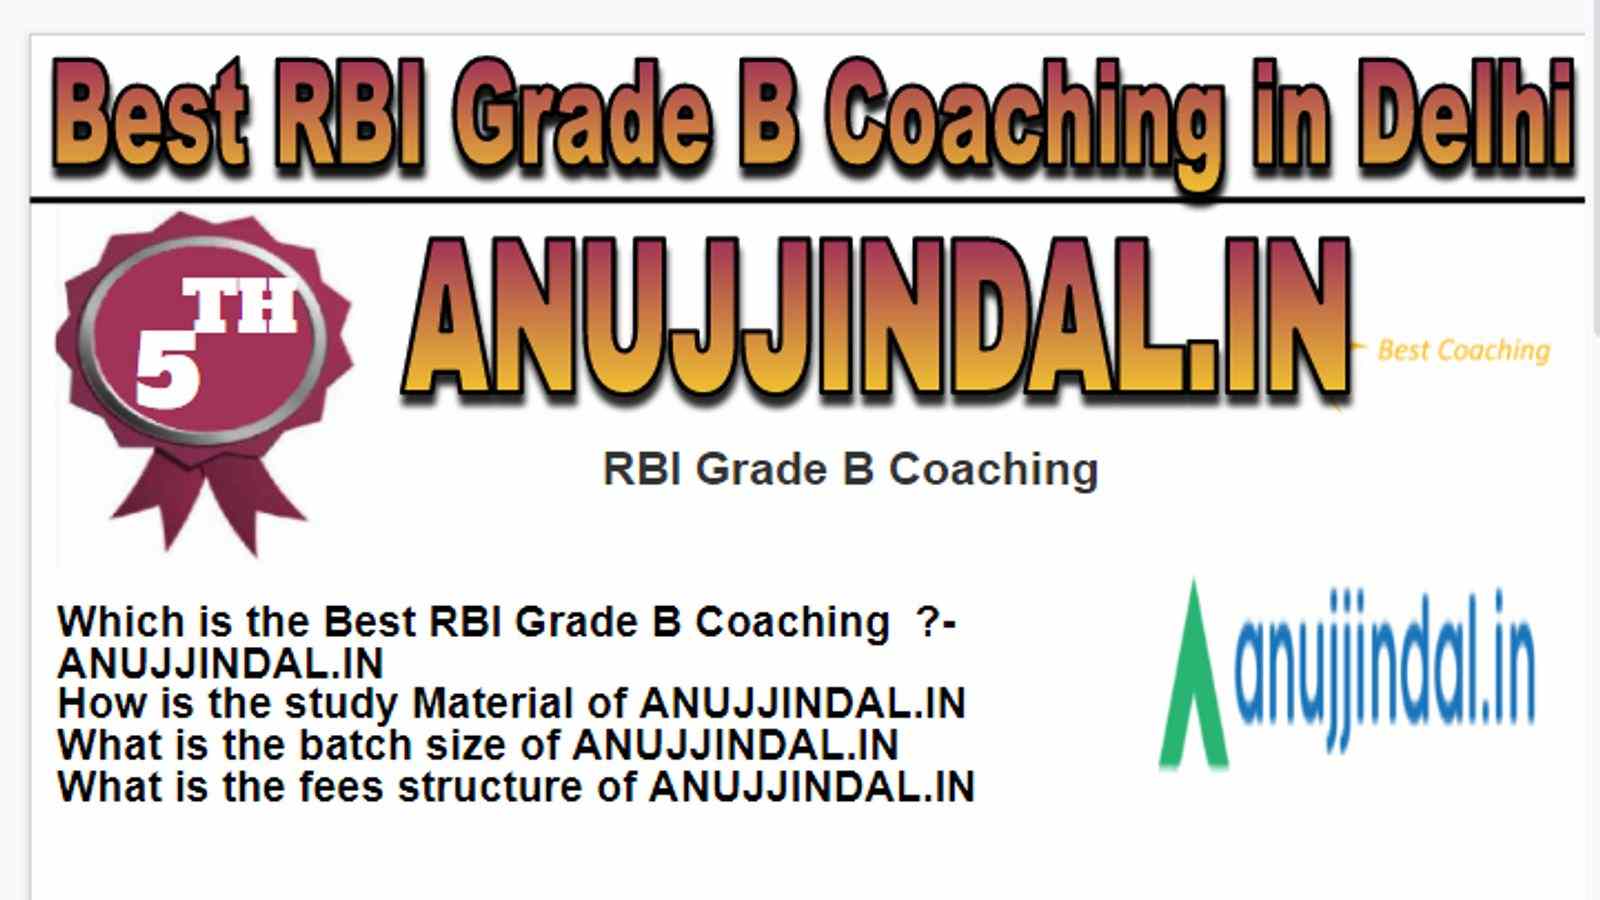 Rank 5 Best RBI Grade B Coaching in Delhi